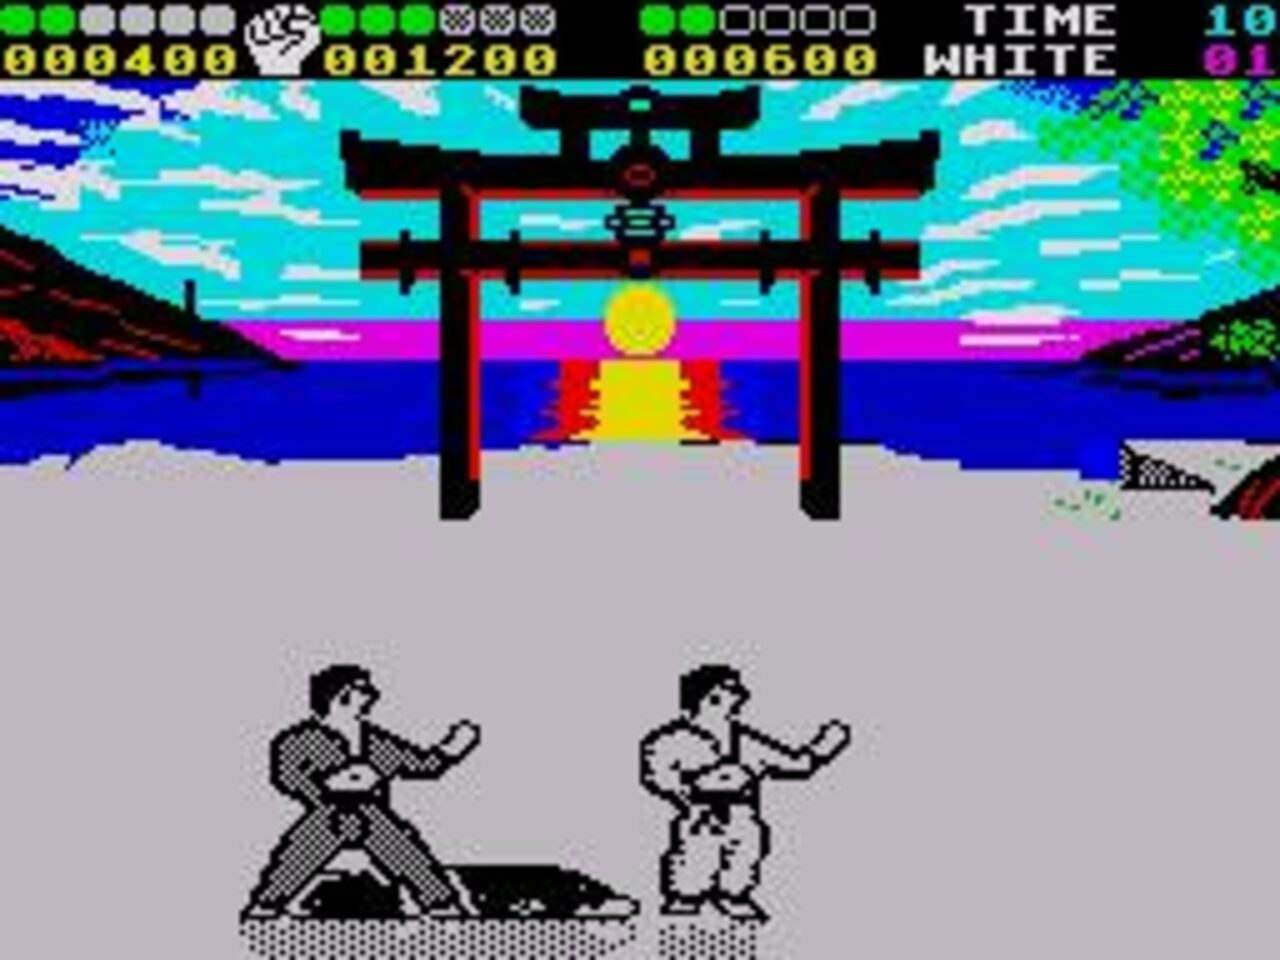 International Karate + Game Boy Advance